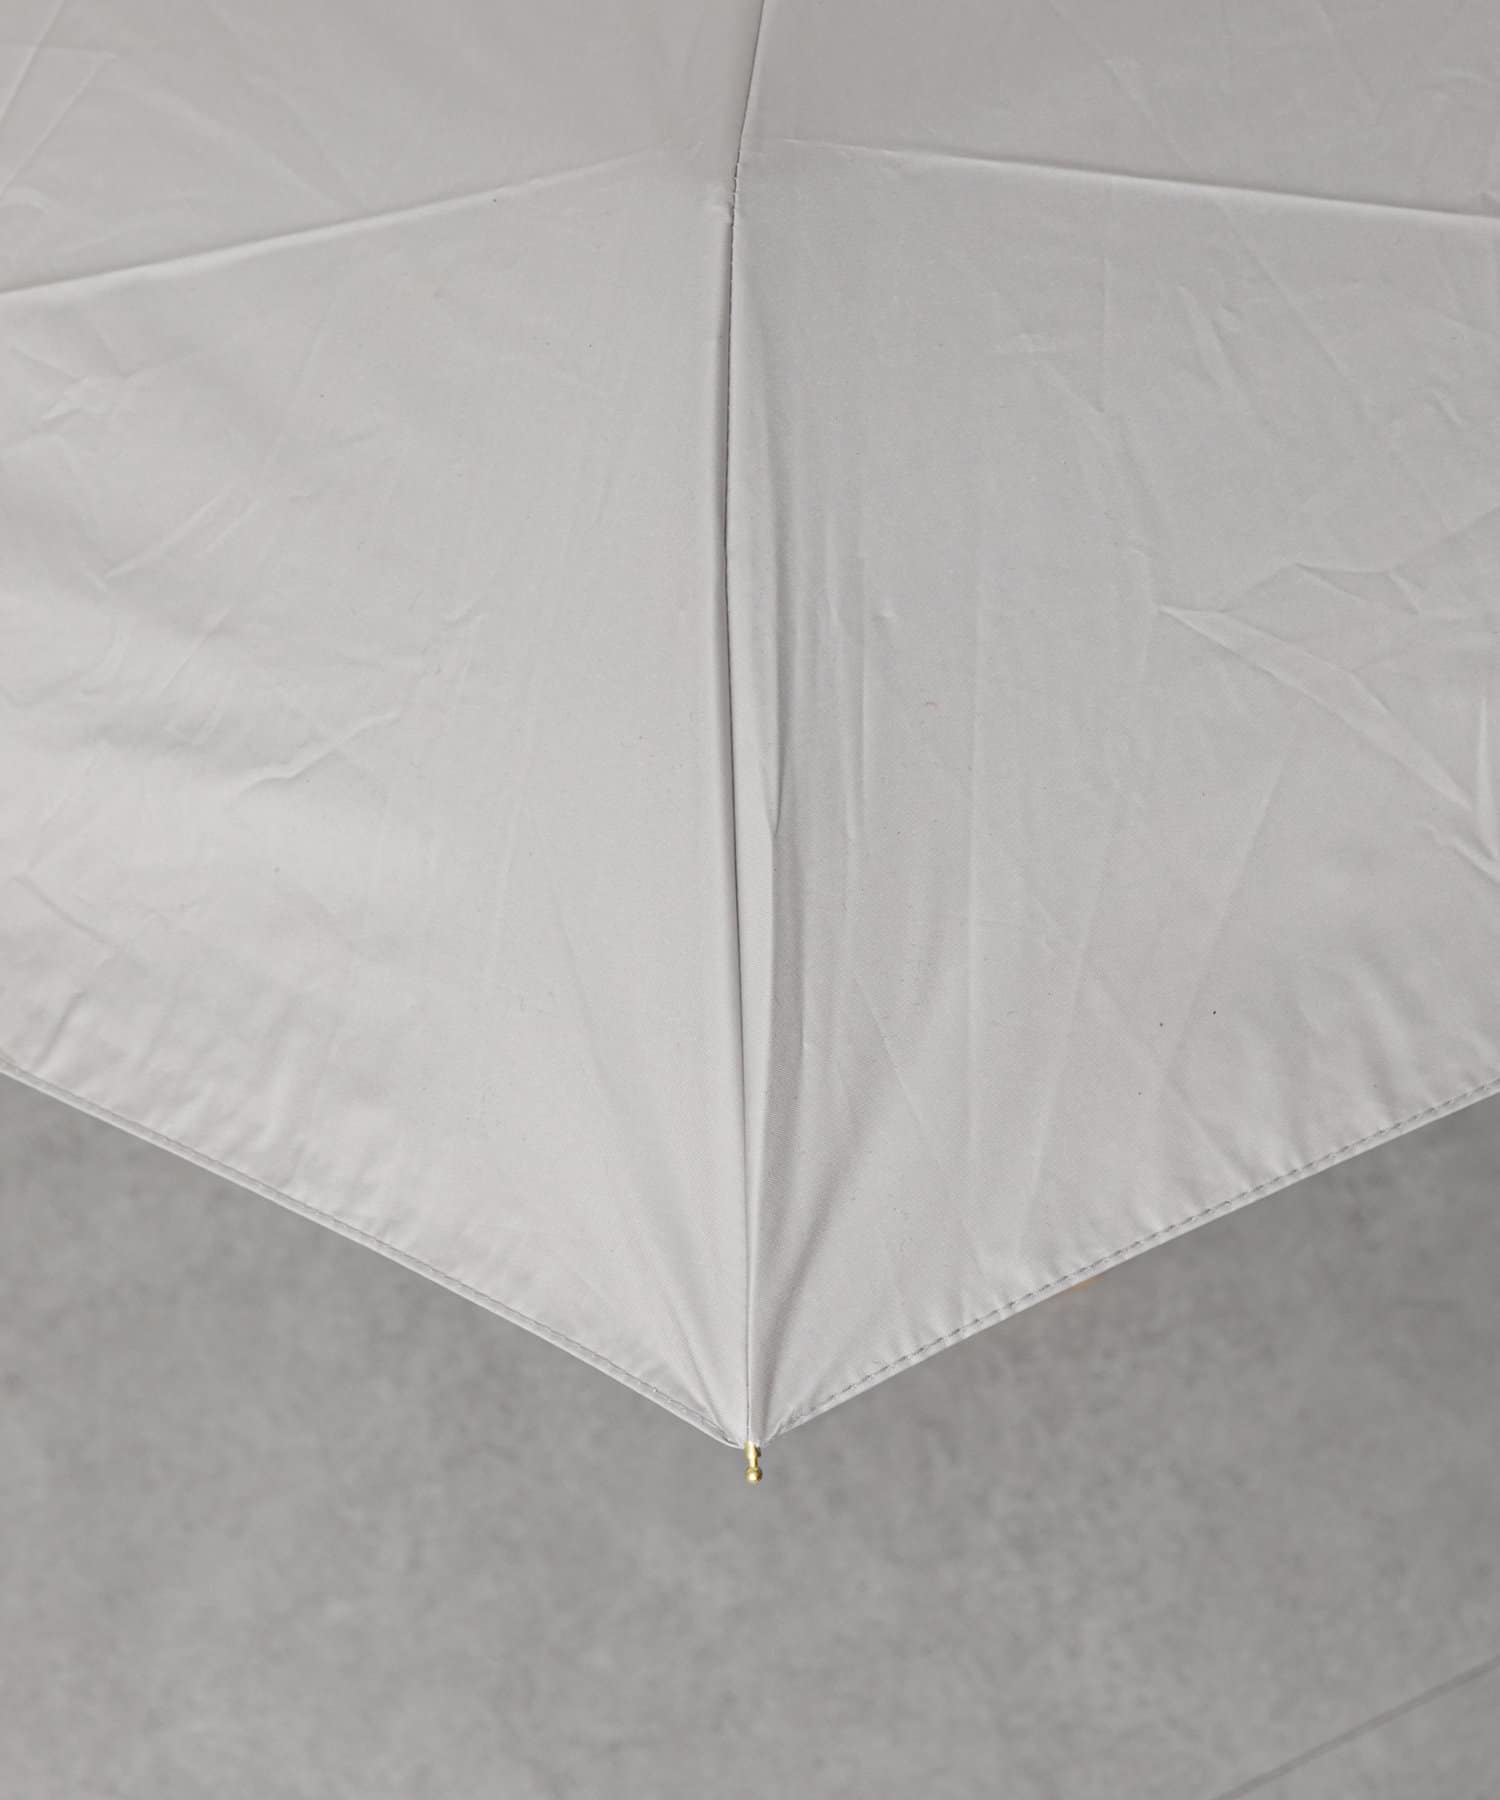 COLONY 2139(コロニー トゥーワンスリーナイン) UVバンブーハンドル折傘